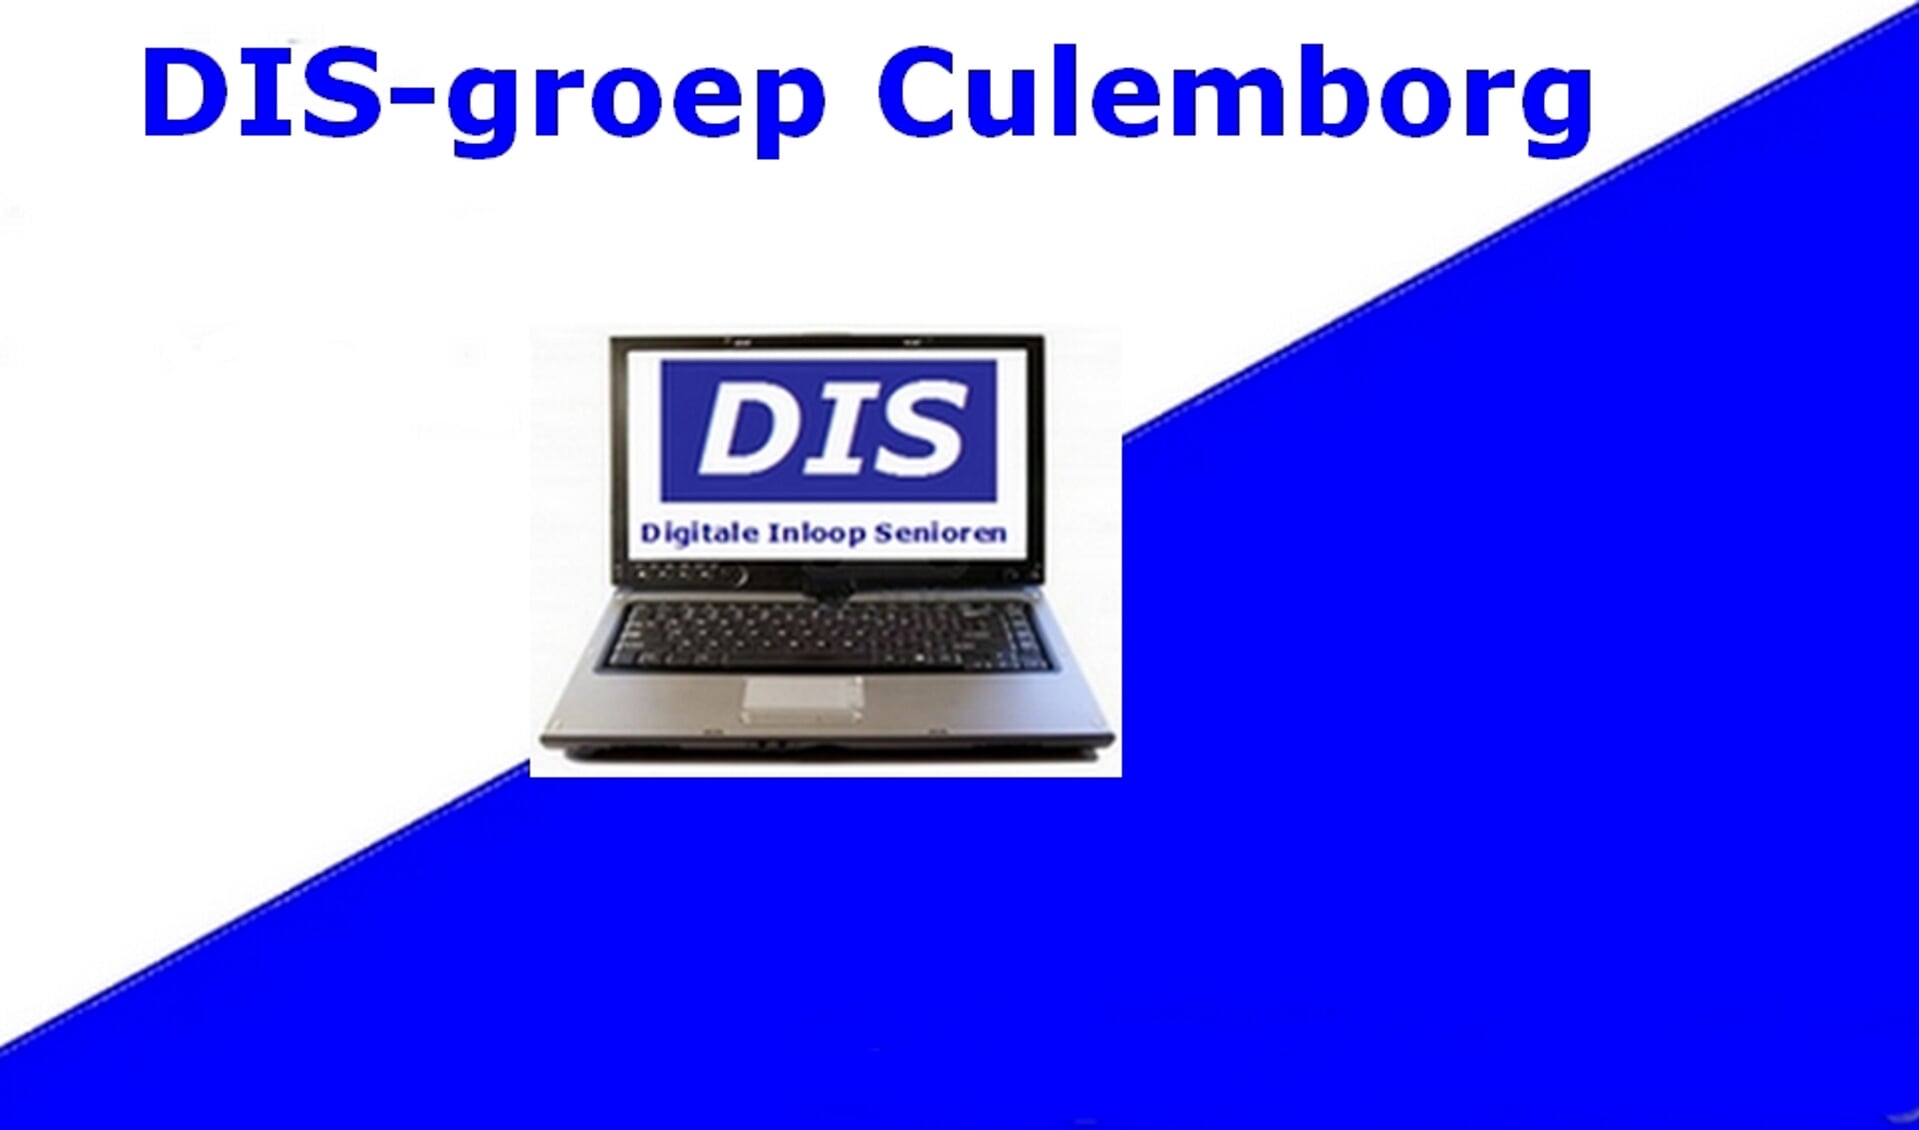 Dis-groep Culemborg